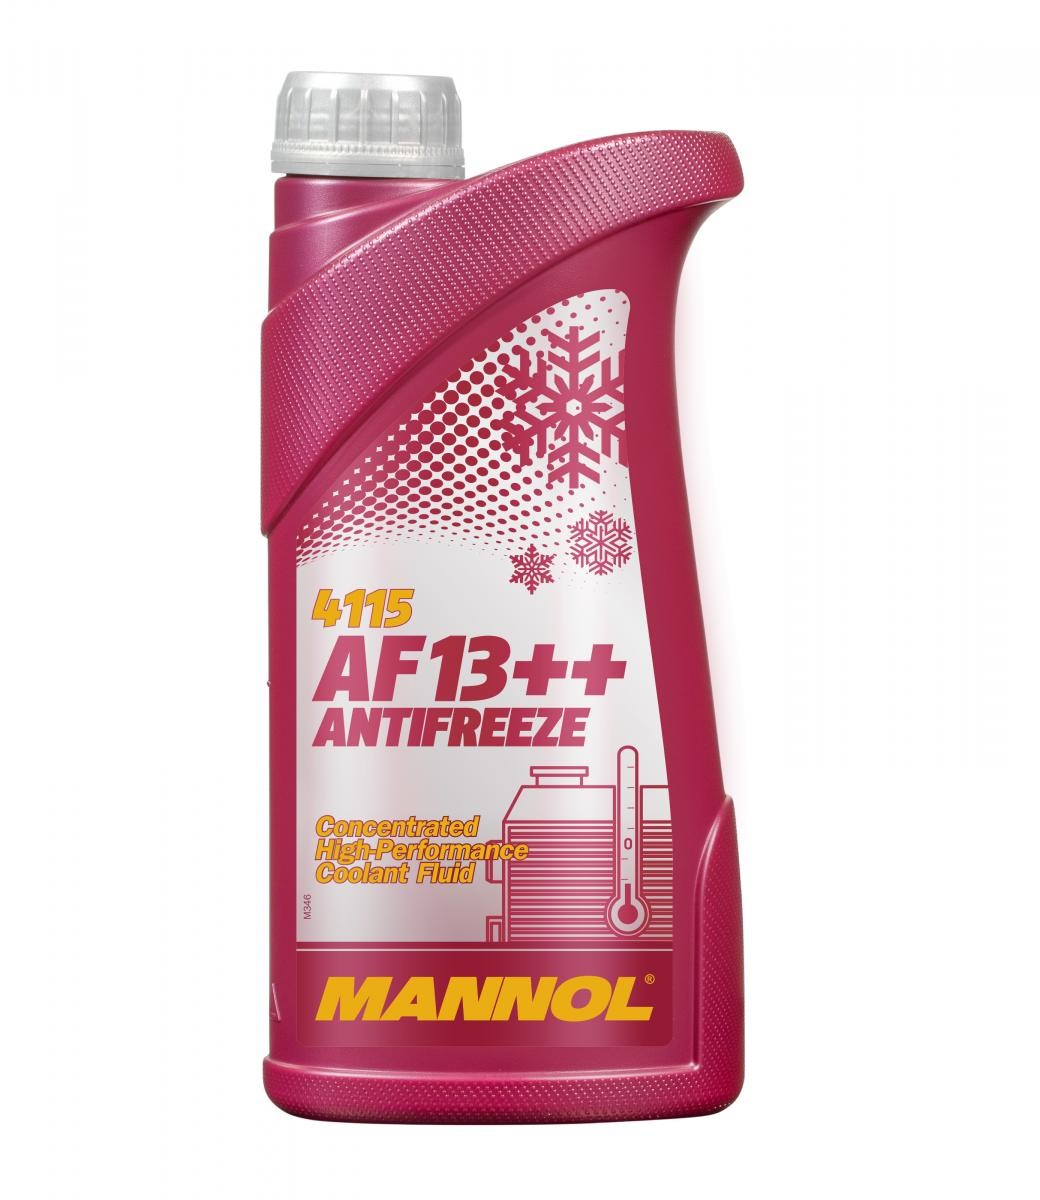 HERCULES PRIMA Kühlmittel G12 Rot, 1l, -38(50/50) MANNOL AF13++, High-performance MN4115-1